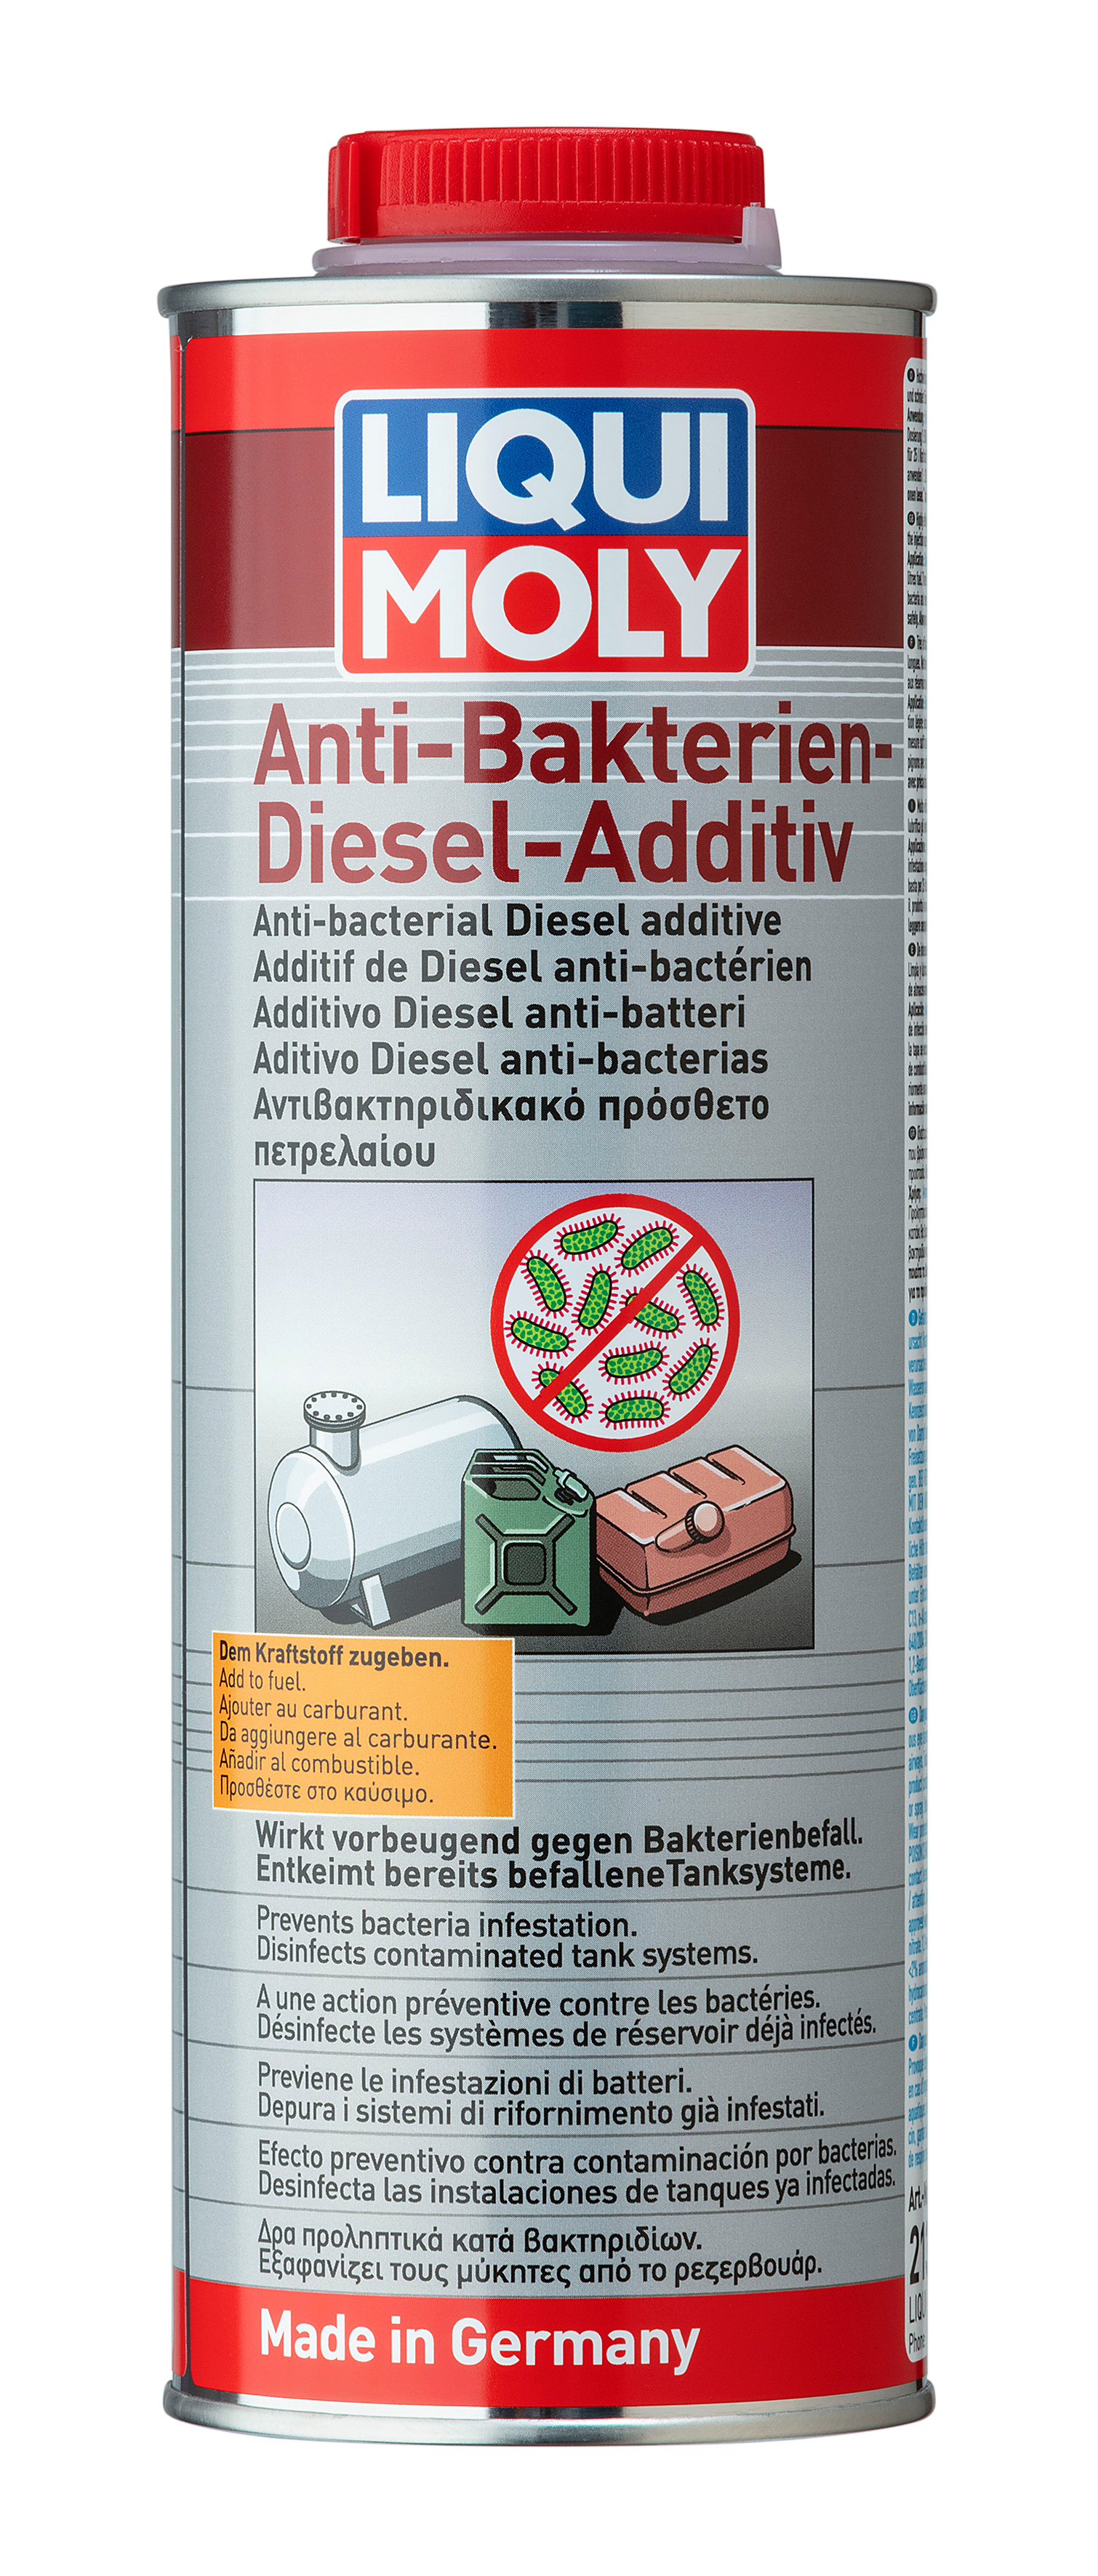 Liqui Moly 21317 Anti Bakterien Diesel Additiv 1l - Biozide - Kraftstoff-Additive  Diesel - Additive & AdBlue 